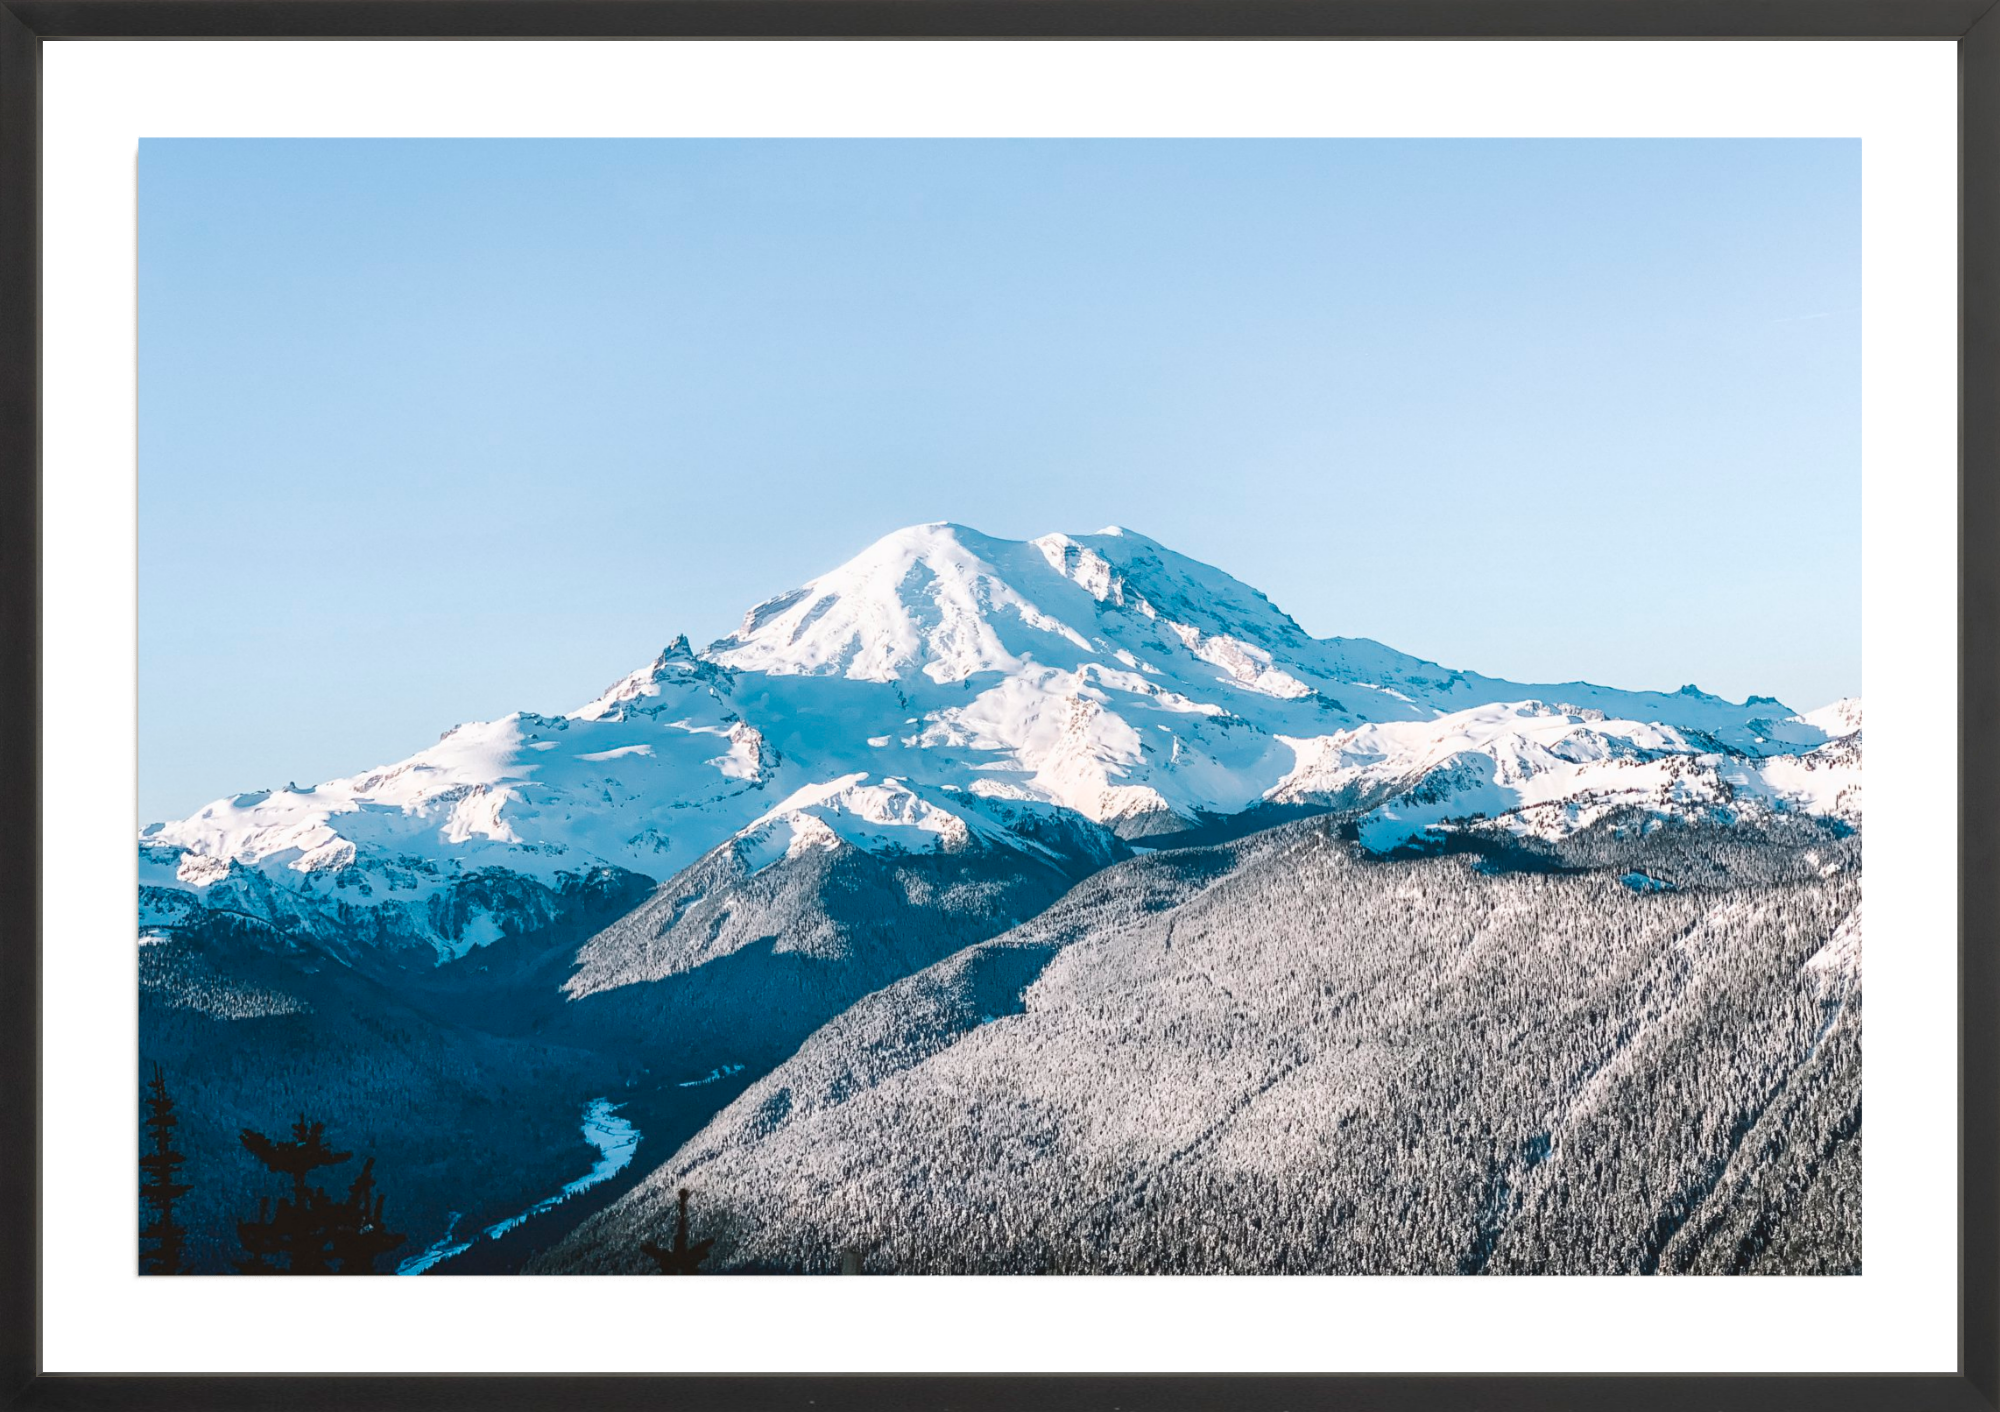 Majestic Mount Rainier